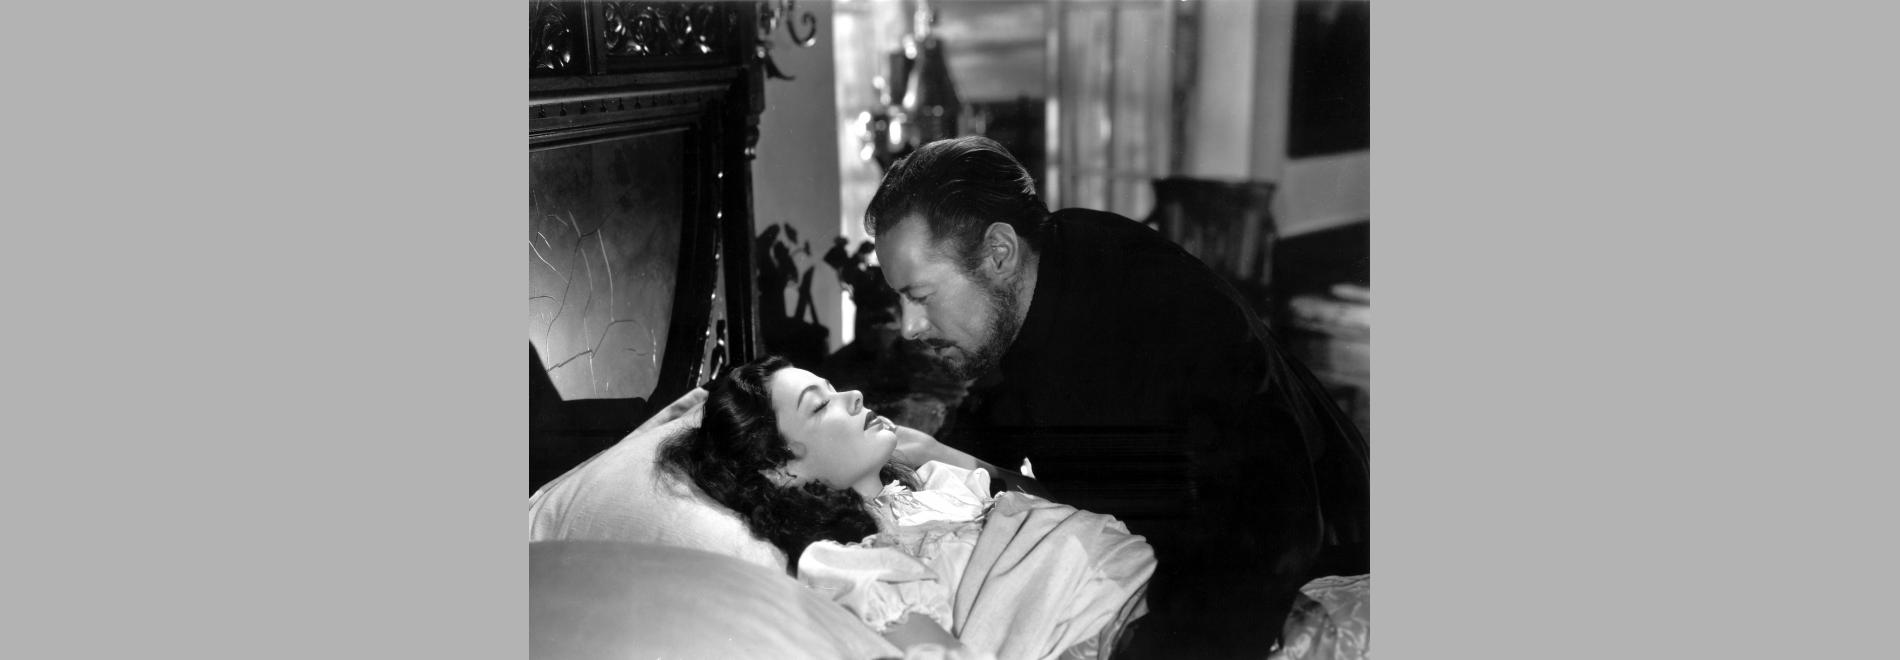 The Ghost and Mrs. Muir (Joseph L. Mankiewicz, 1947)